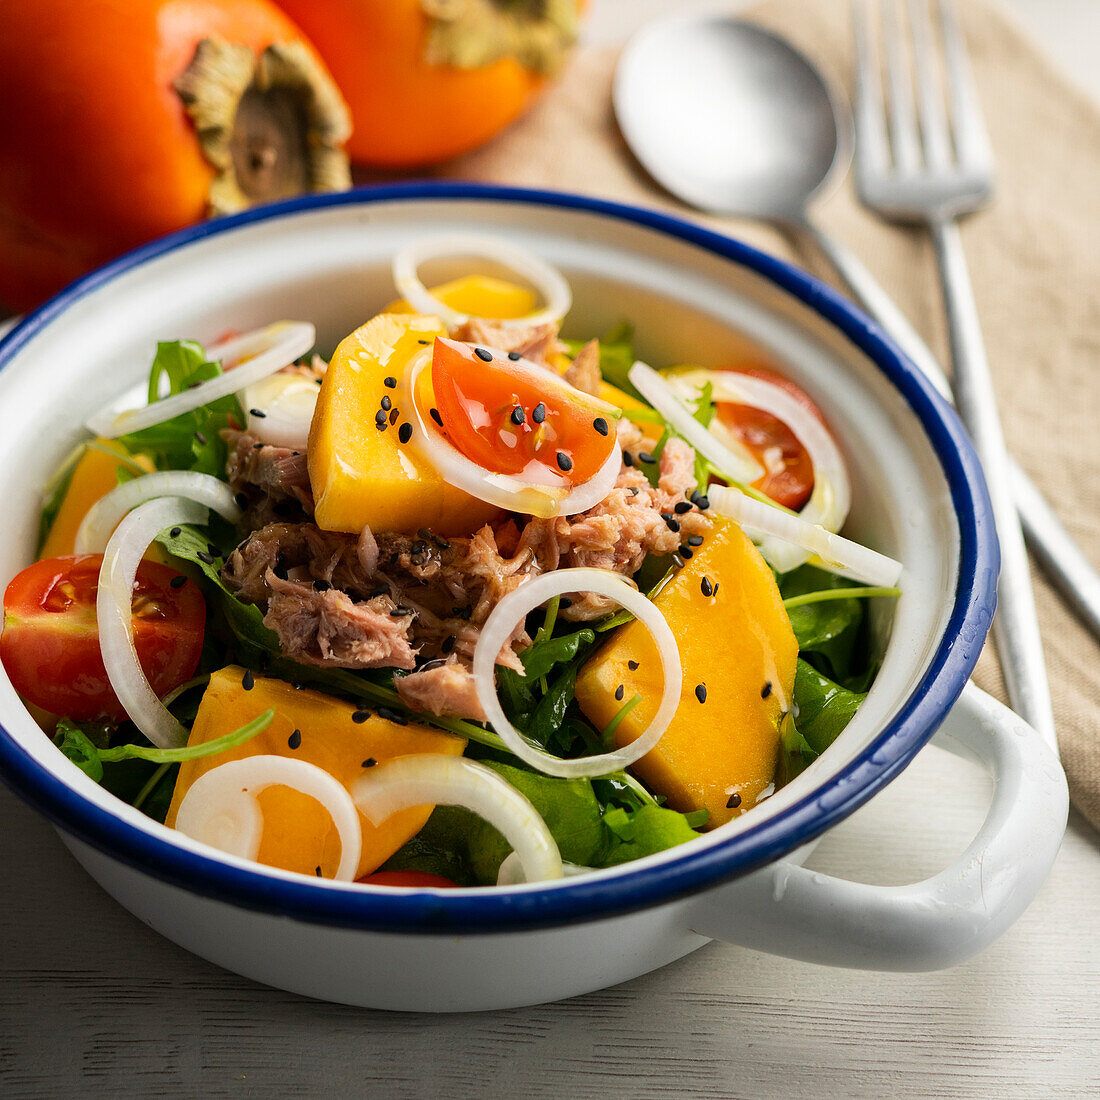 Salad with persimmon, tuna and tomatoes